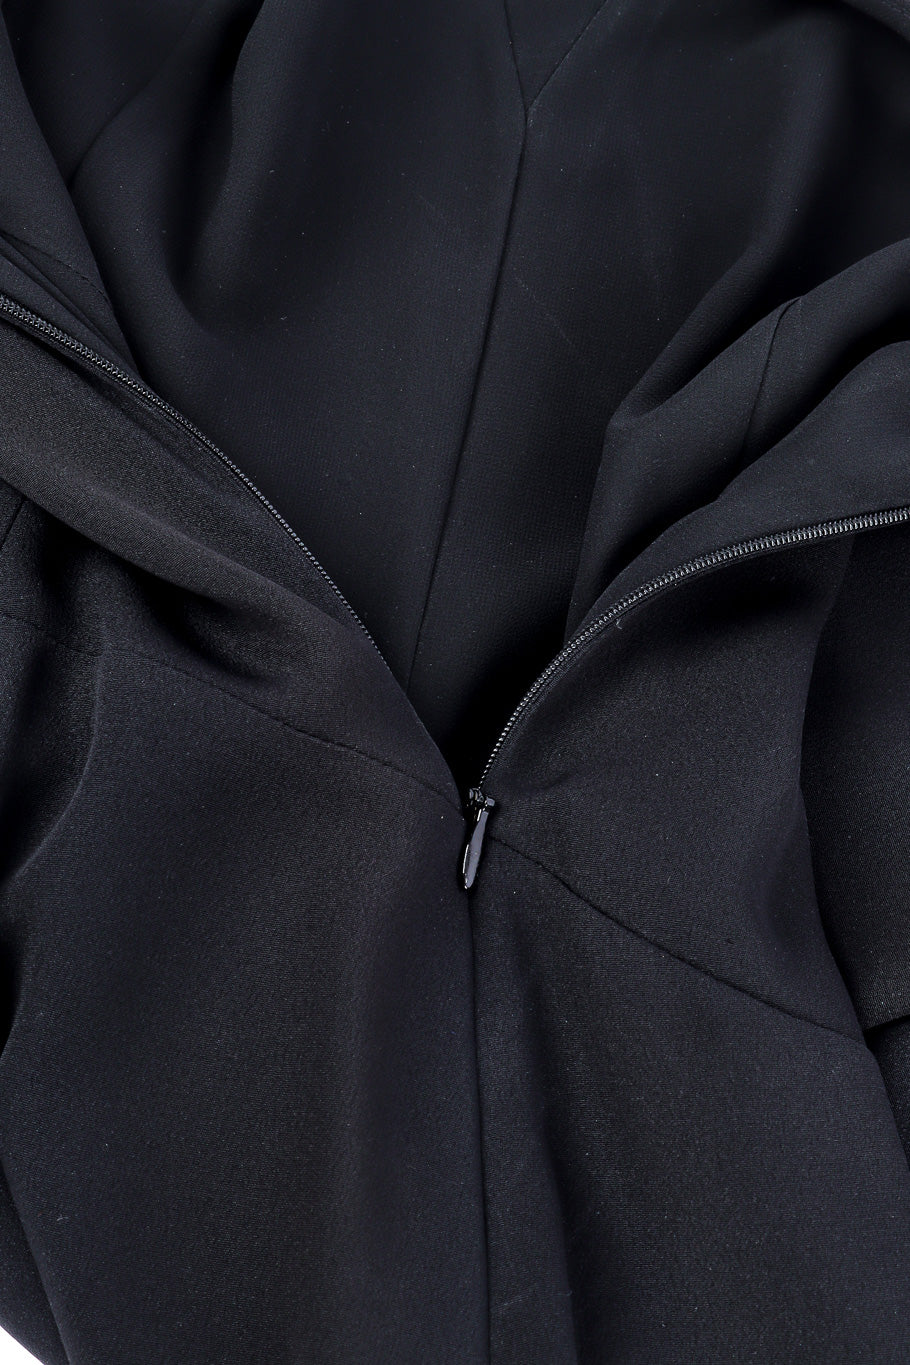 Valentino sleeveless maxi dress side zipper @recessla